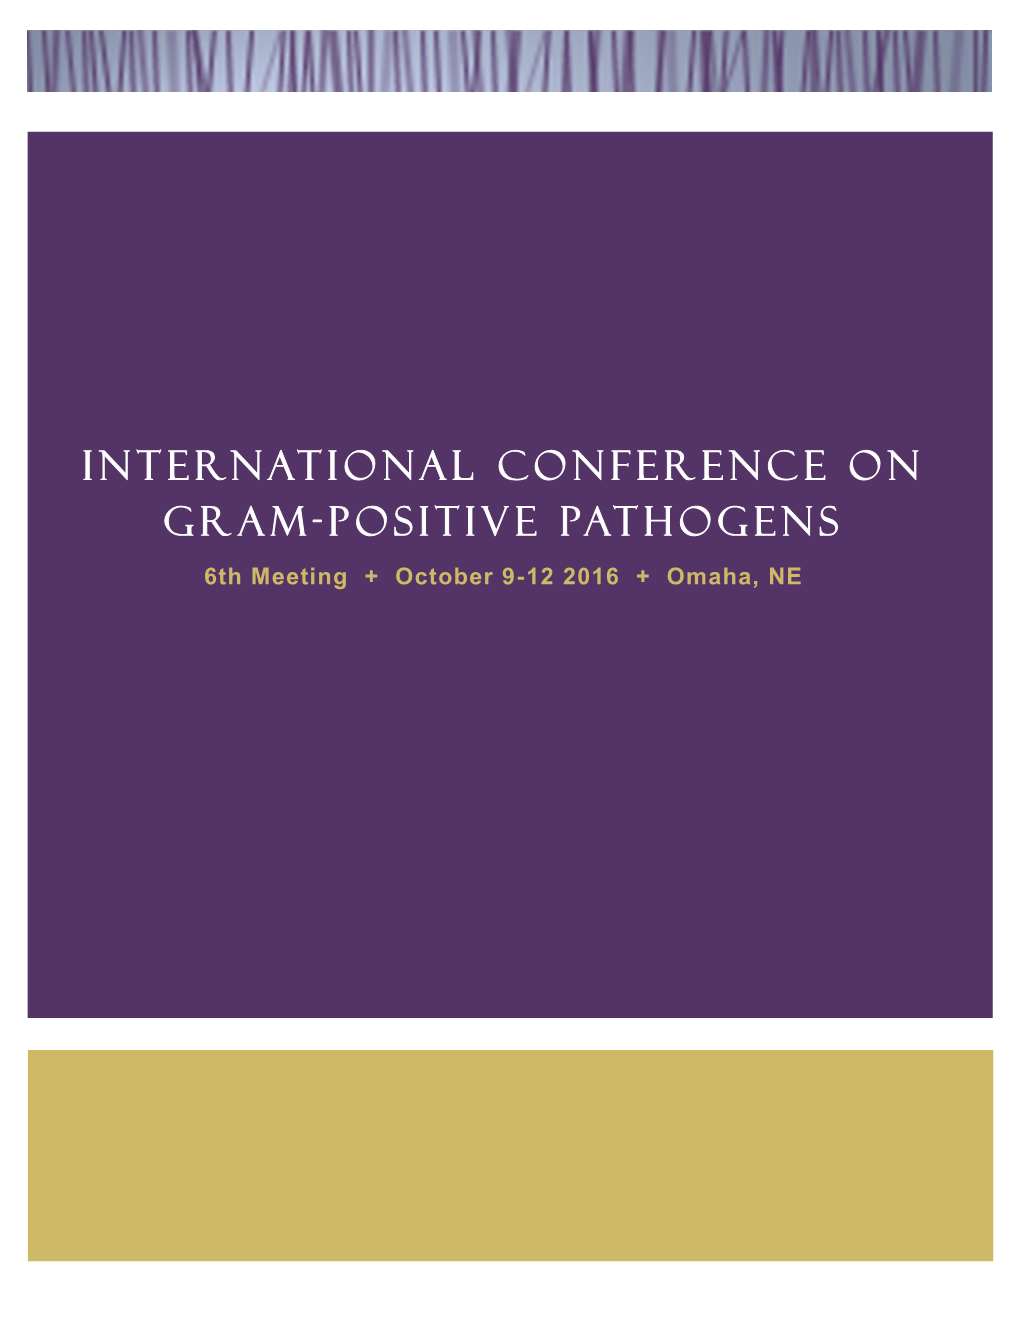 International Conference on Gram-Positive Pathogens